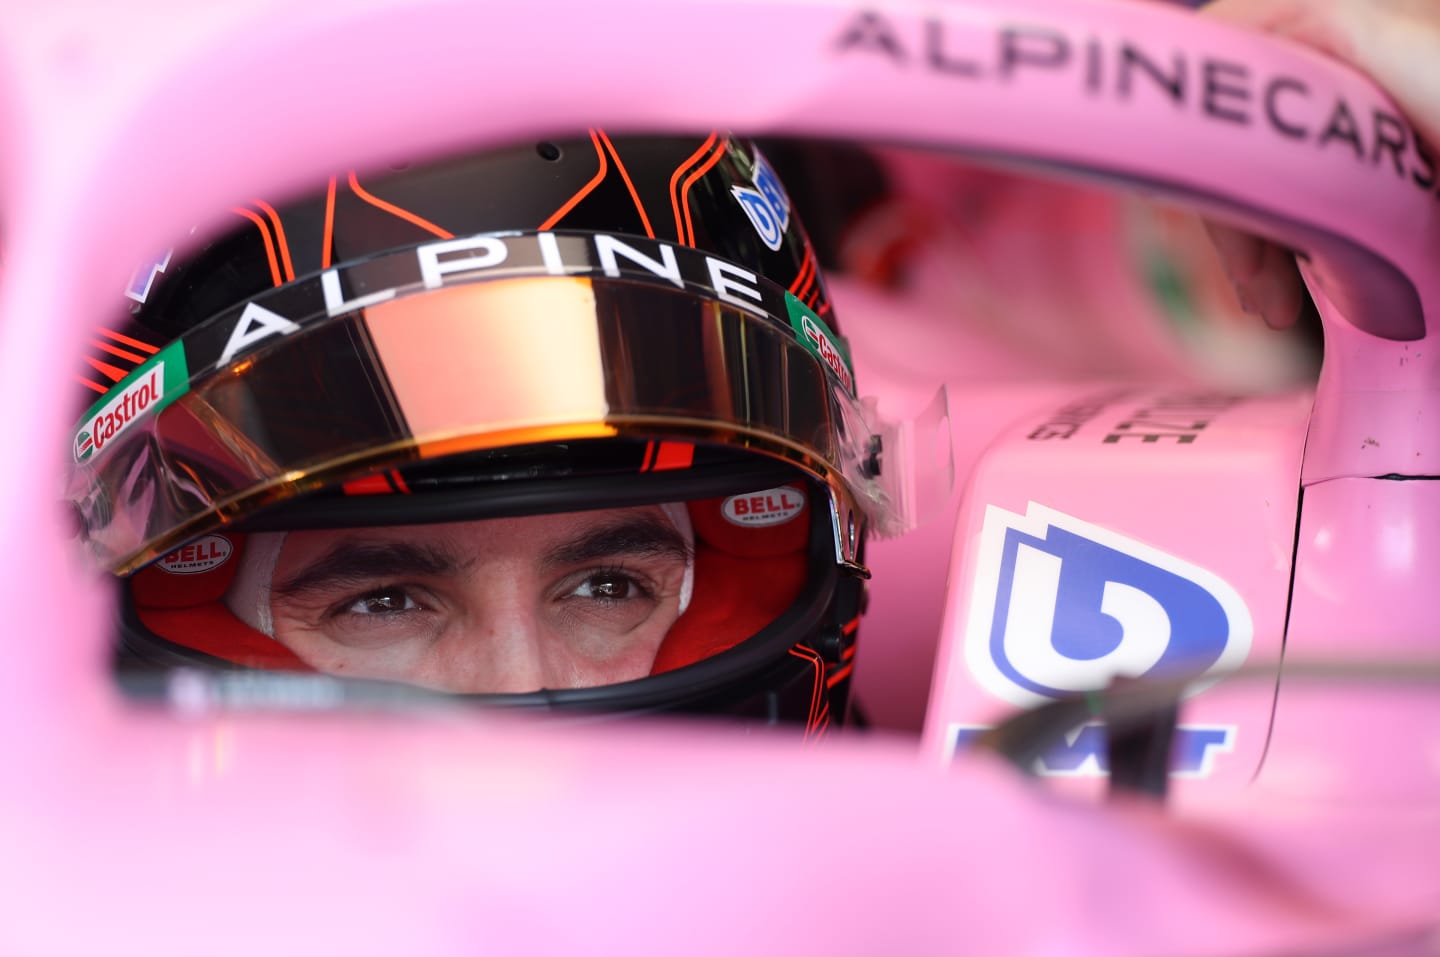 BAHRAIN, BAHRAIN - MARCH 04: Esteban Ocon of France and Alpine F1 prepares to drive in the garage